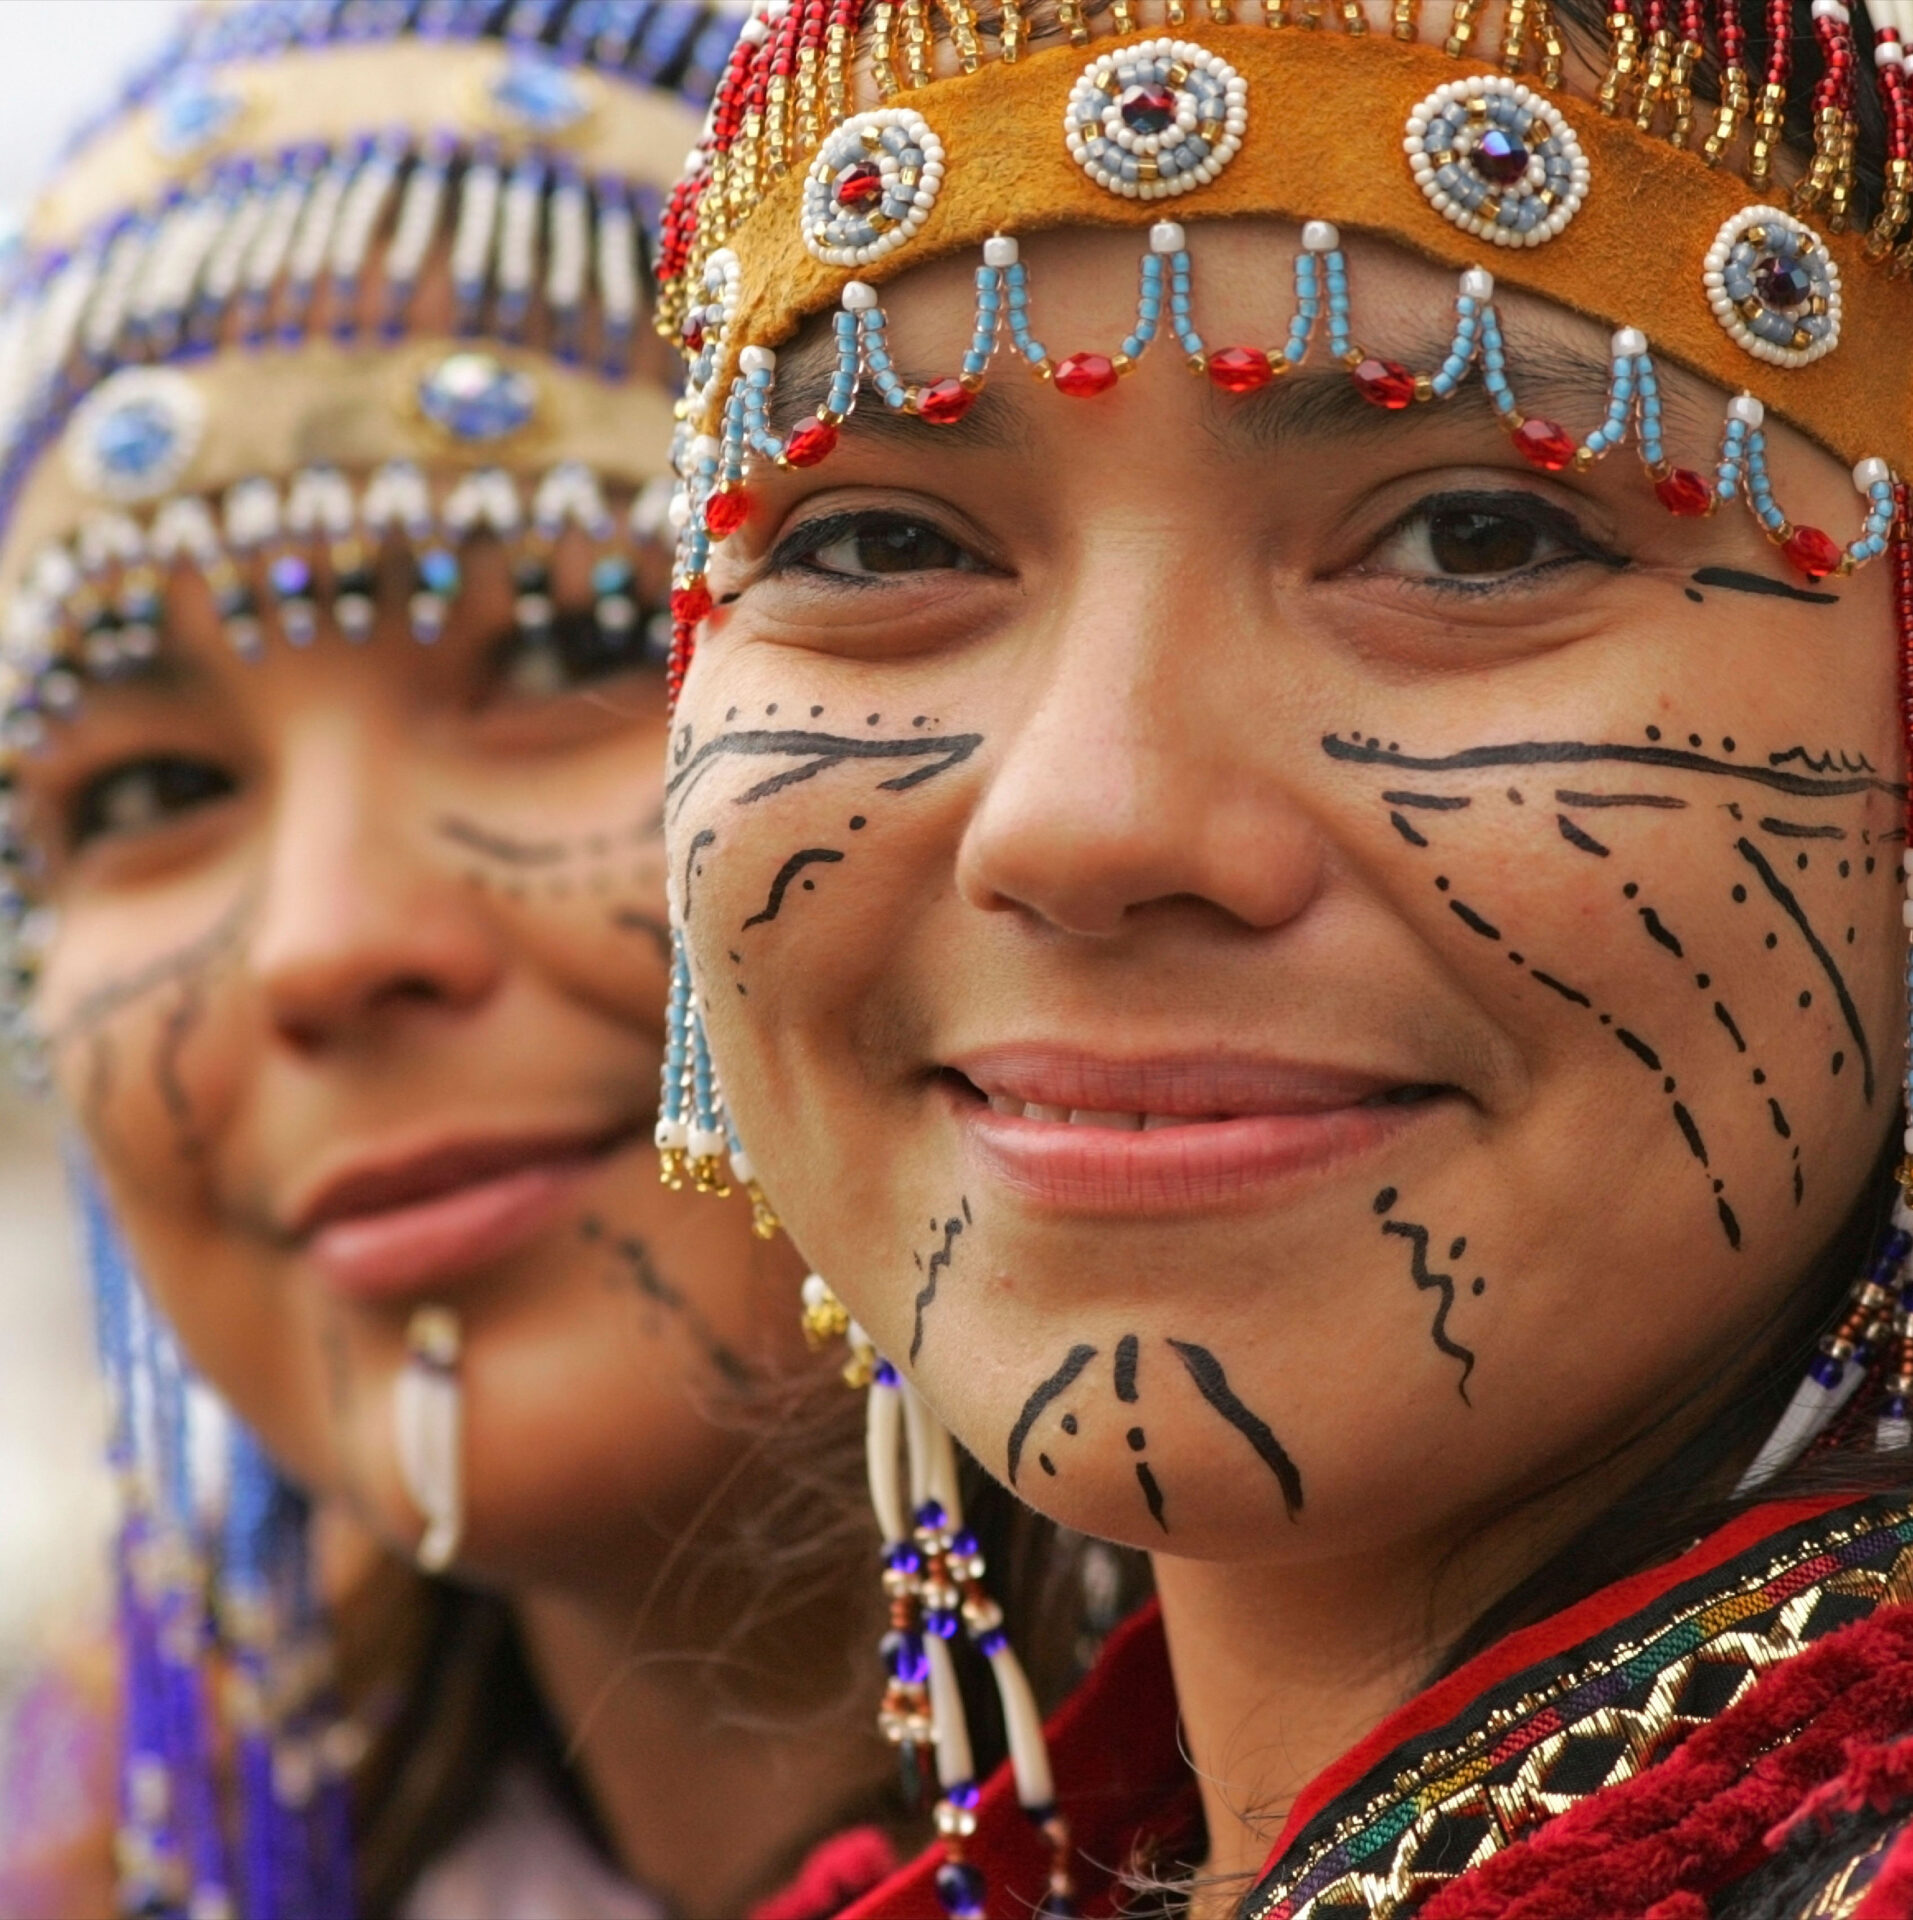 Alaska Native women in traditional headdresses